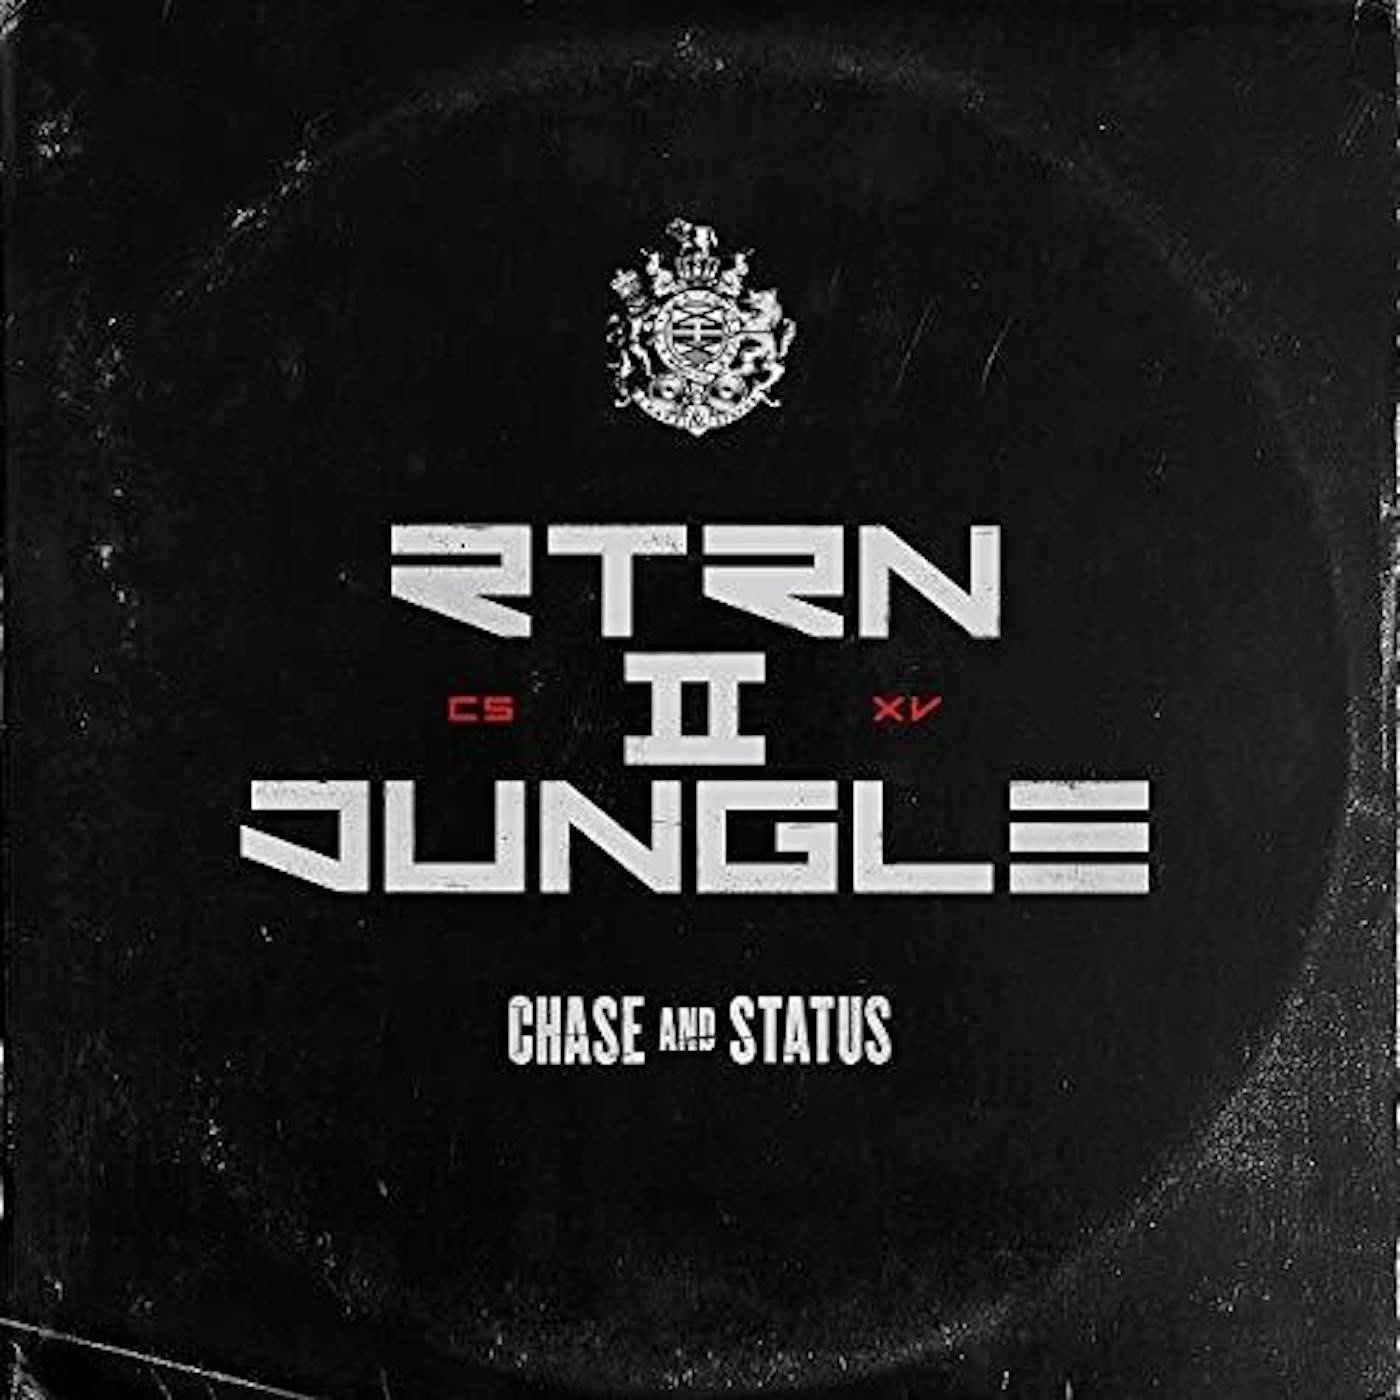 Chase & Status RTRN II JUNGLE Vinyl Record